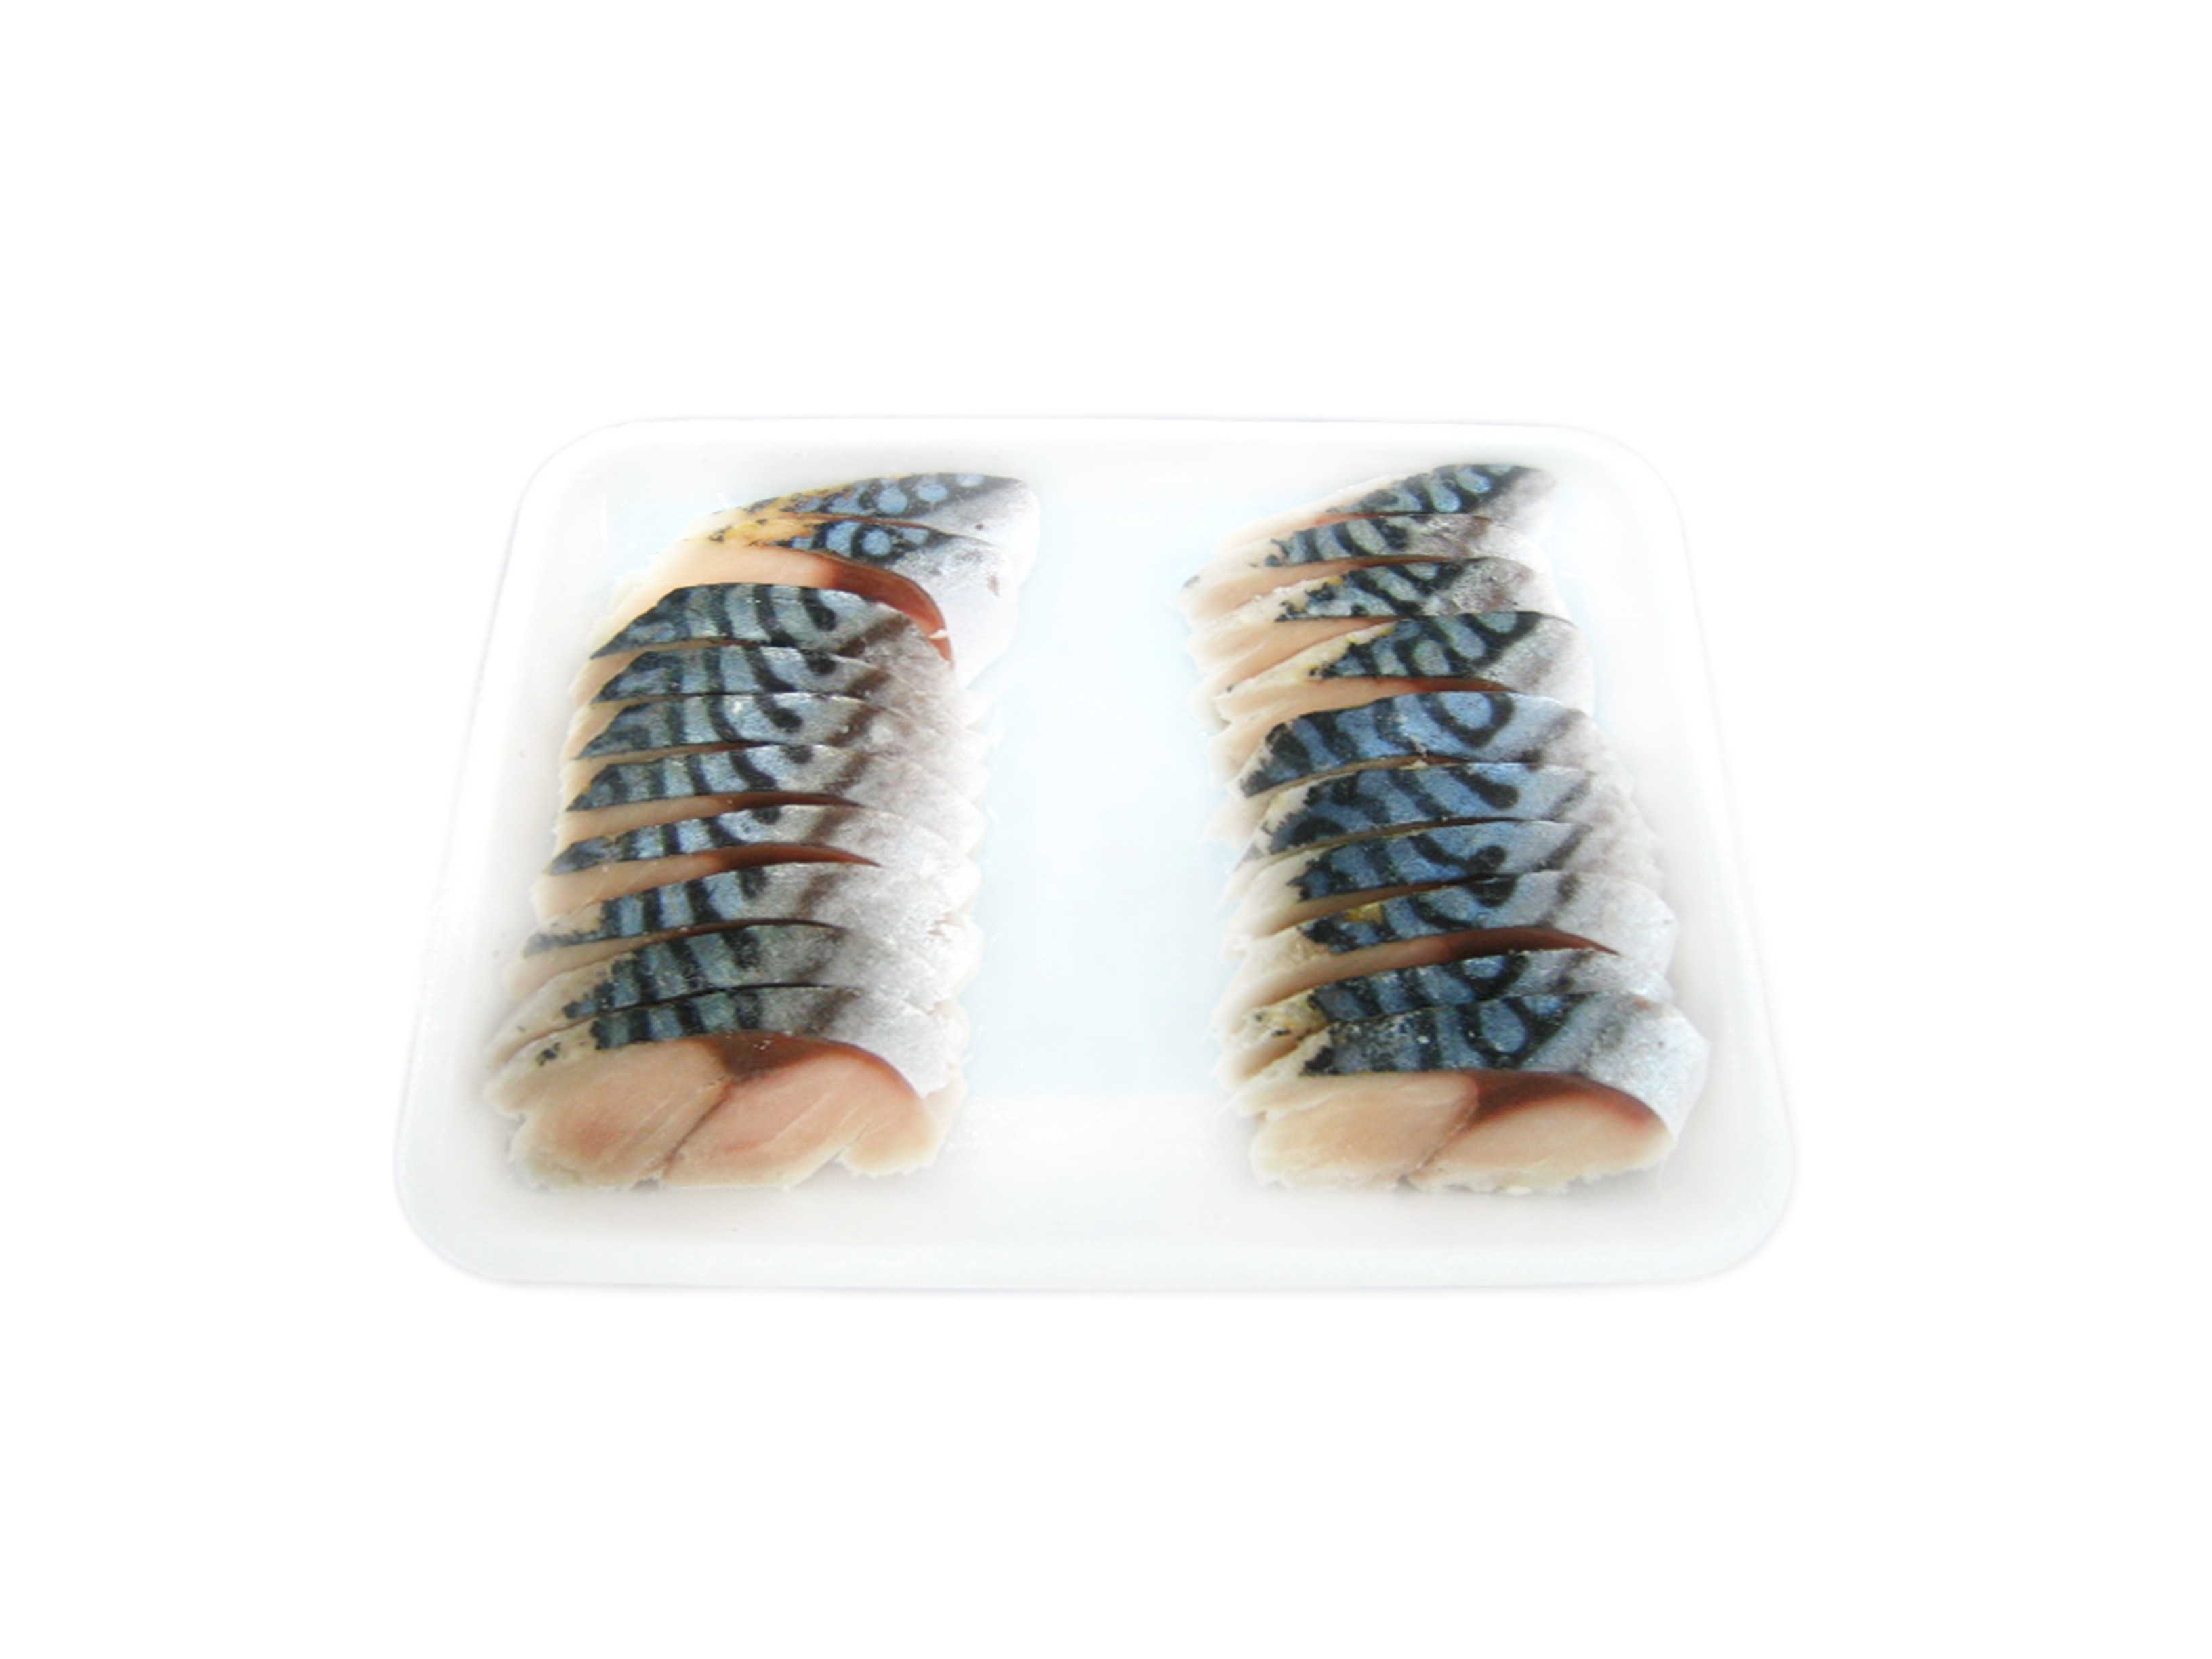 Shime Saba - Mackerel Slice 20 x 8gr 160g/20pcs - 25 trays